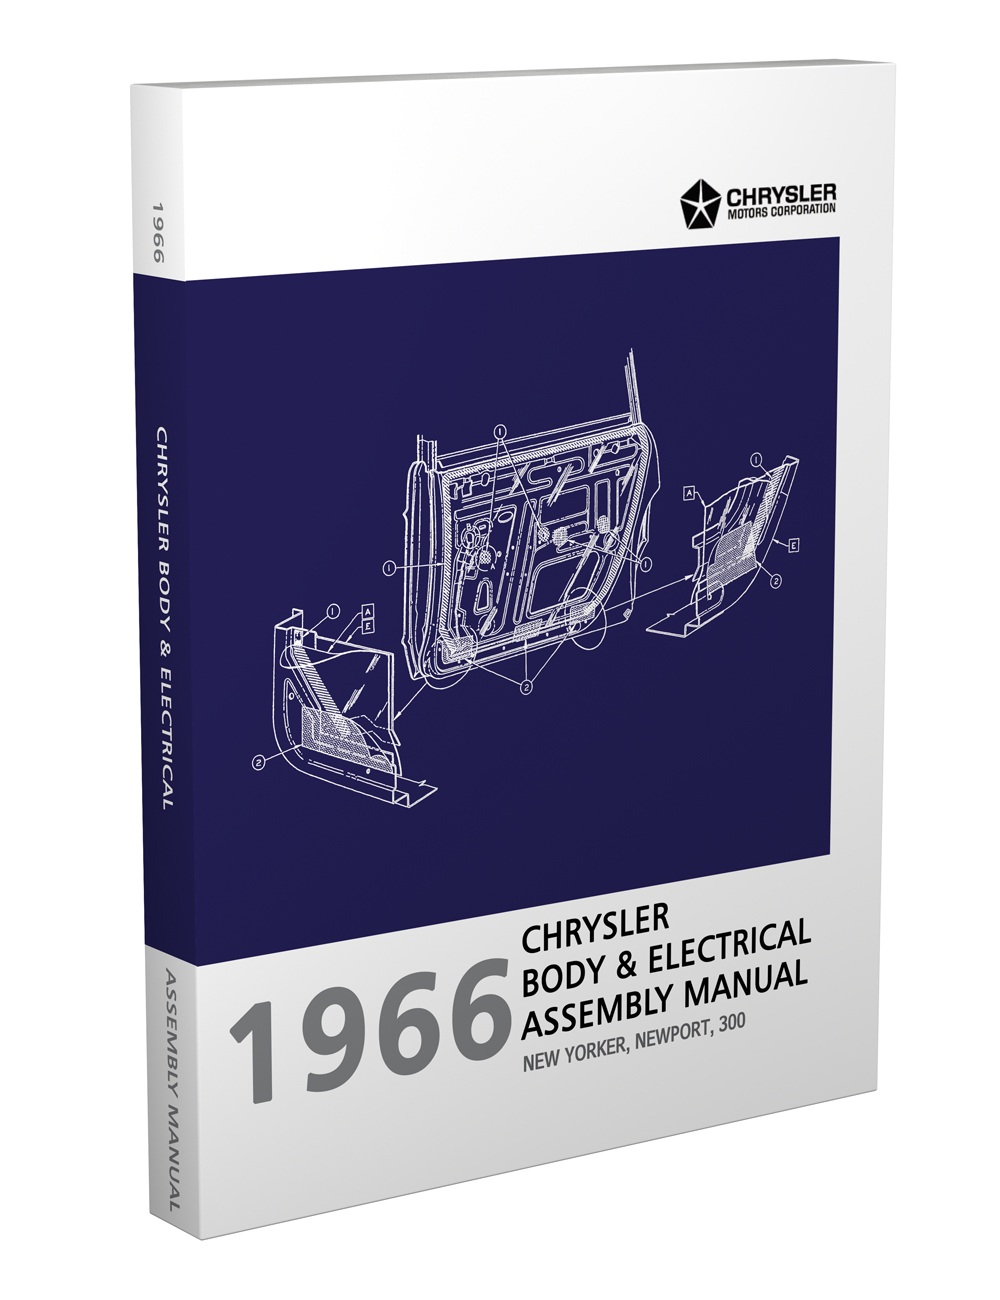 1966 Chrysler Body & Electrical Assembly Manual Reprint